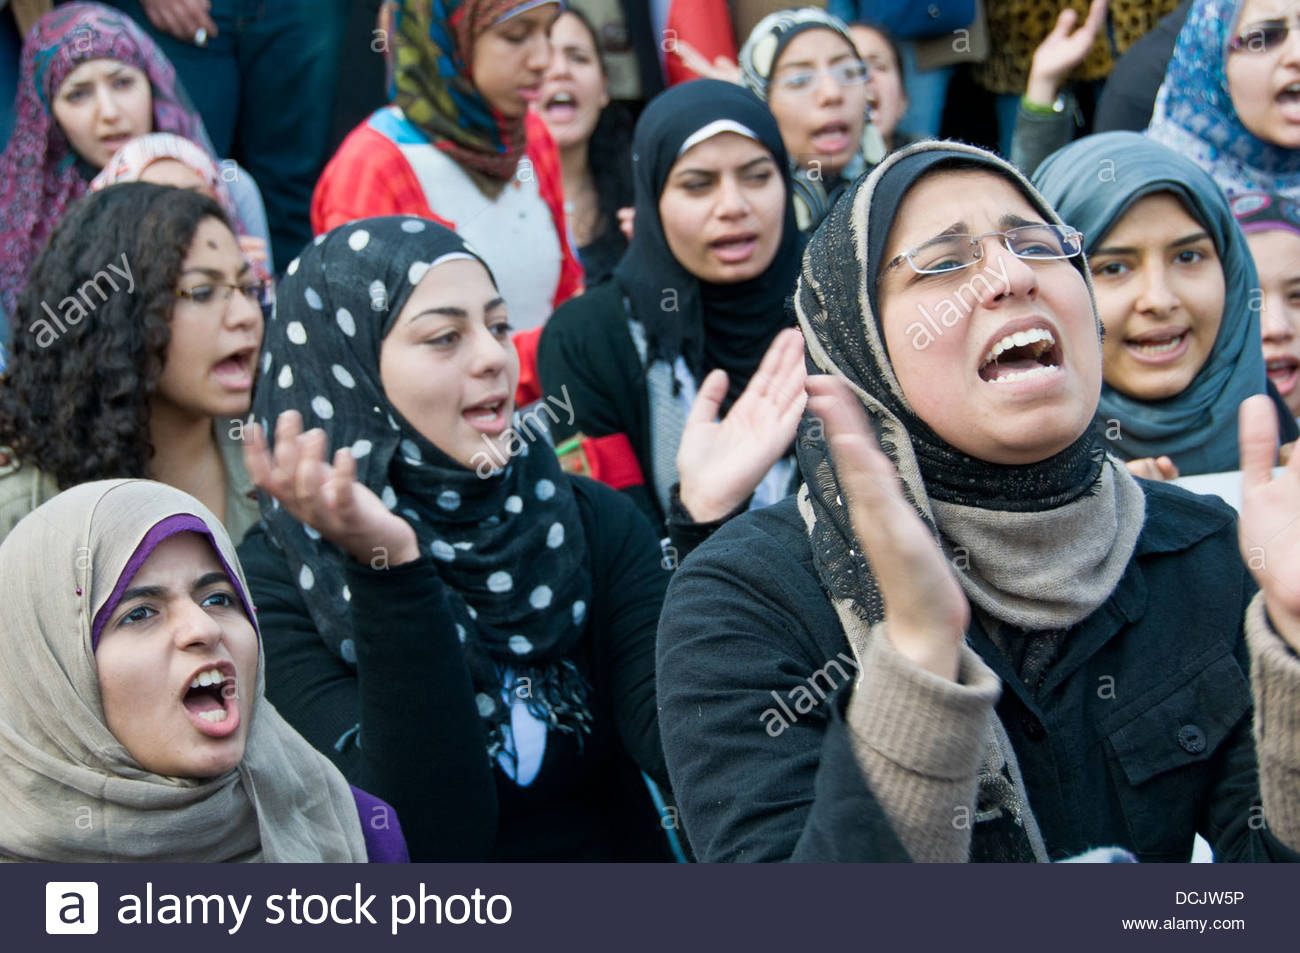 women-protesters-tahrir-square-cairo-egypt-DCJW5P.jpg